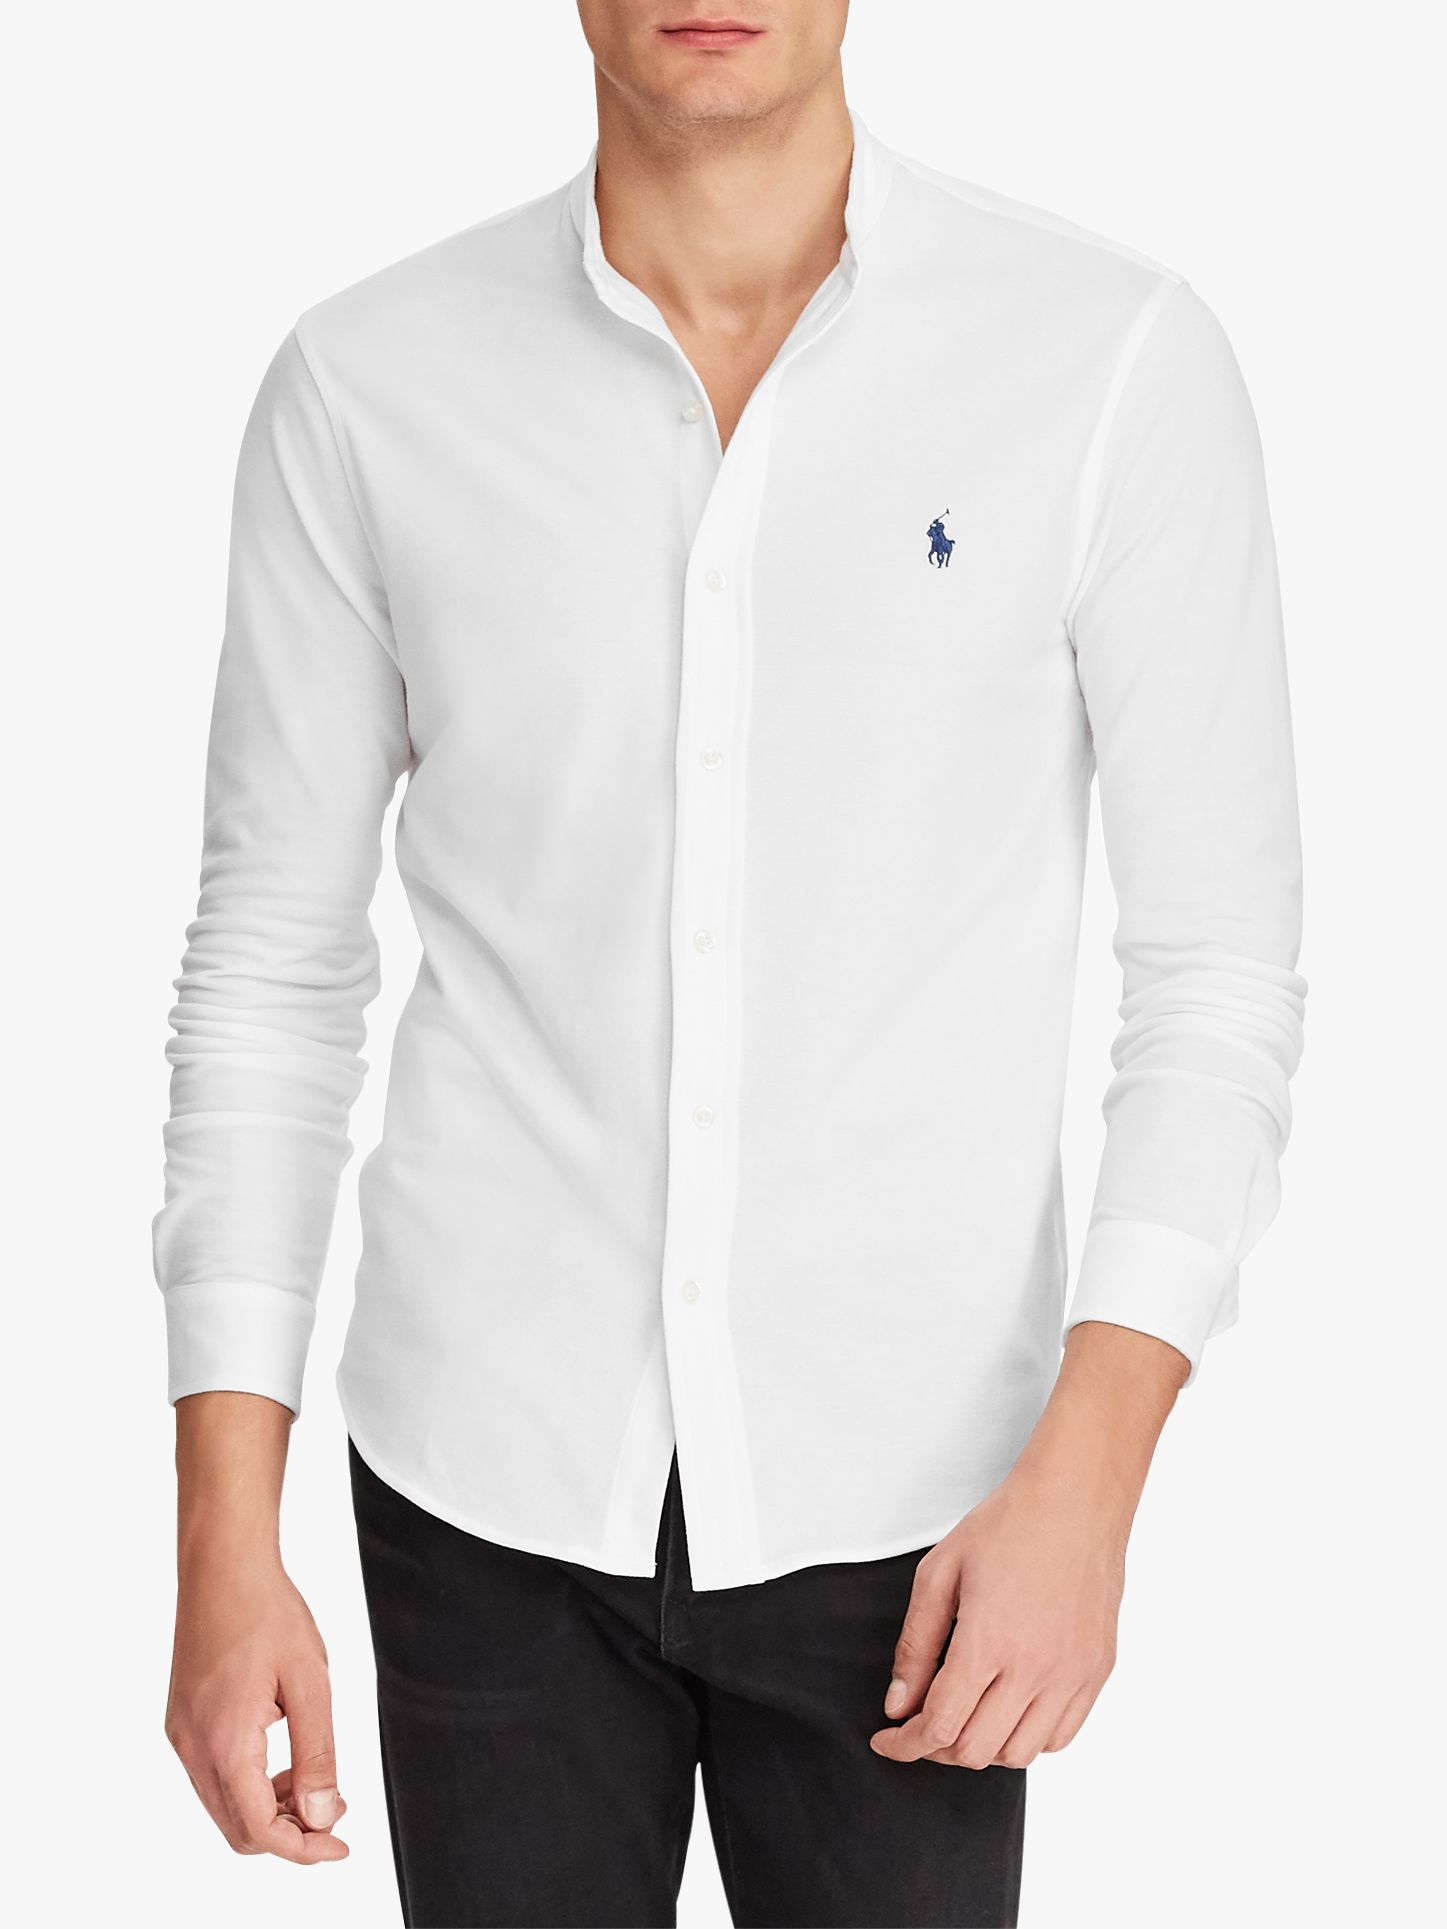 Polo Ralph Lauren Grandad Collar Long Sleeve Shirt, White, L